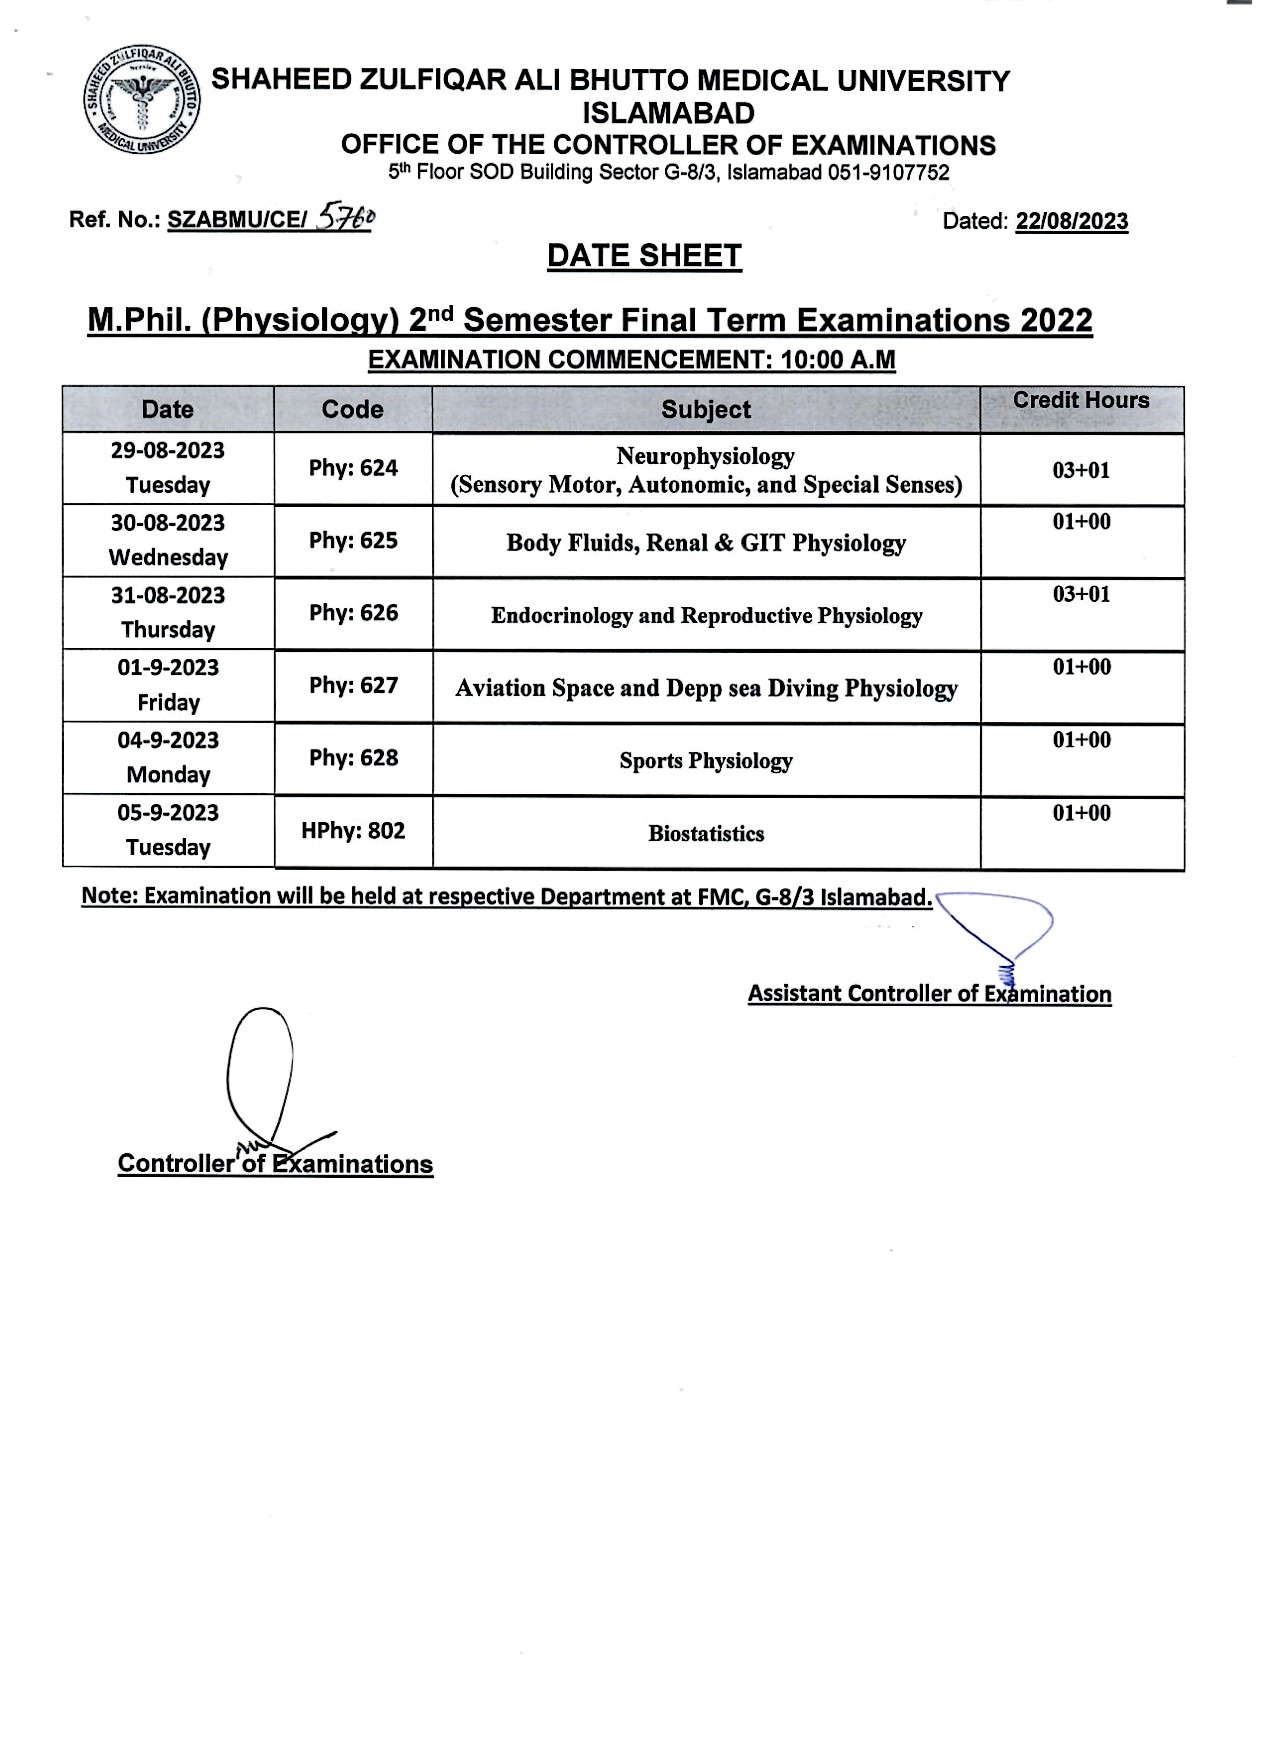 Date Sheet - M.Phil. (Physiology) 2nd Semester Final Term Examinations 2022